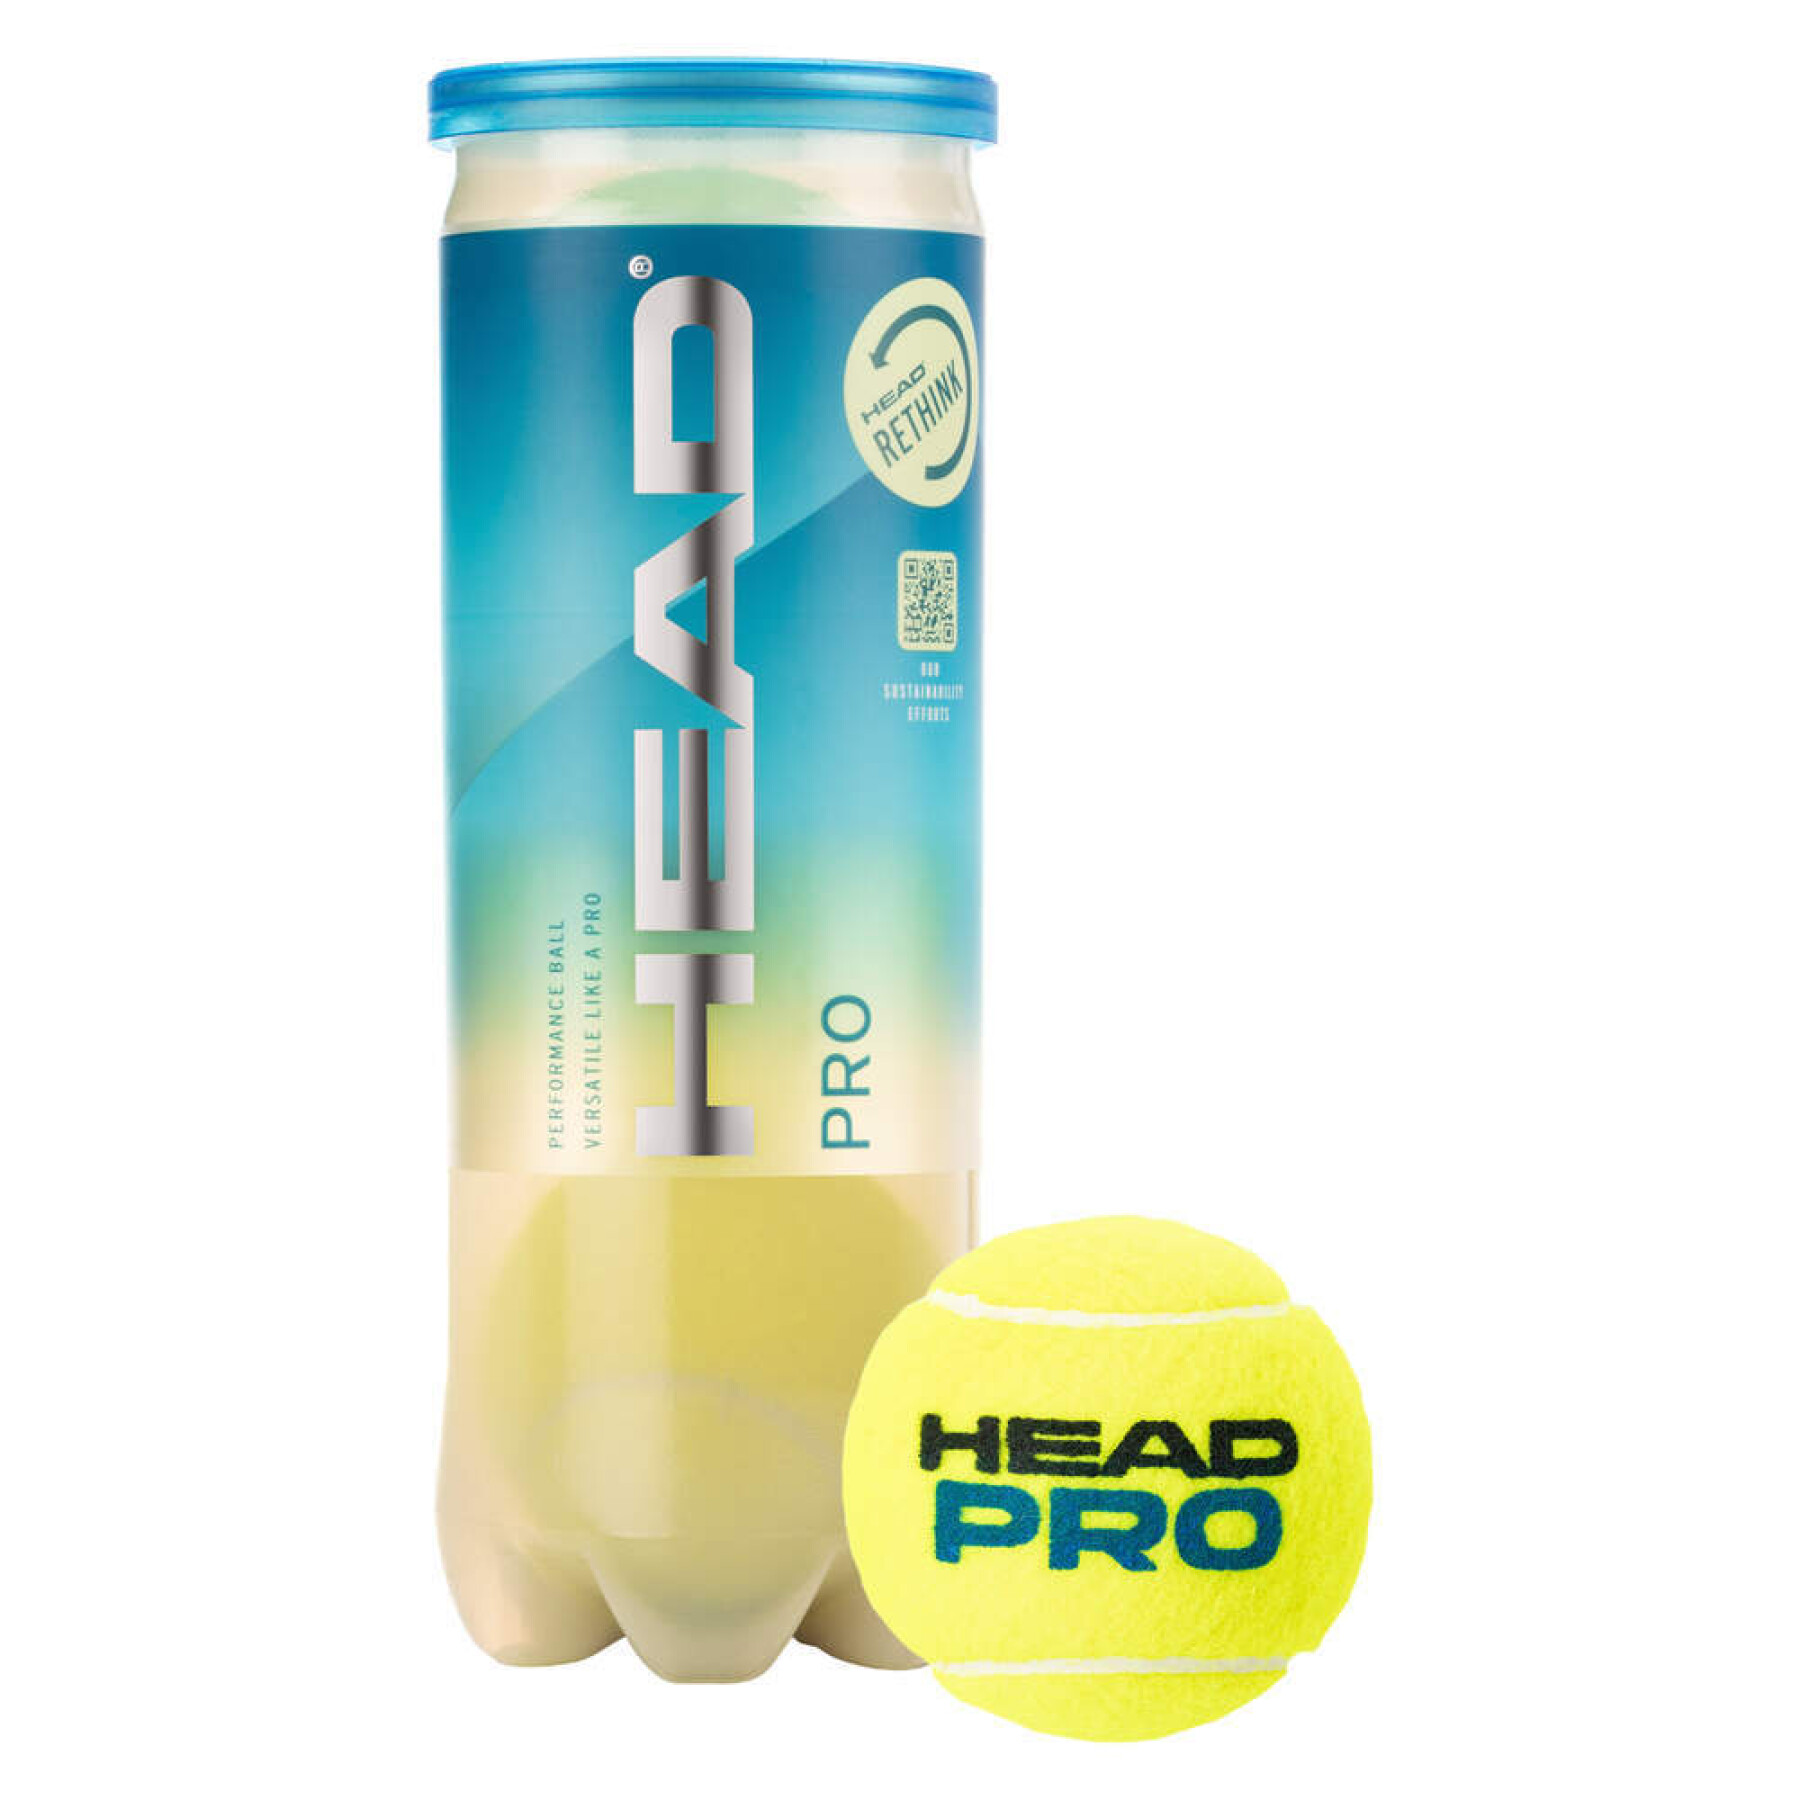 Pallina da tennis Head Pro (x3)